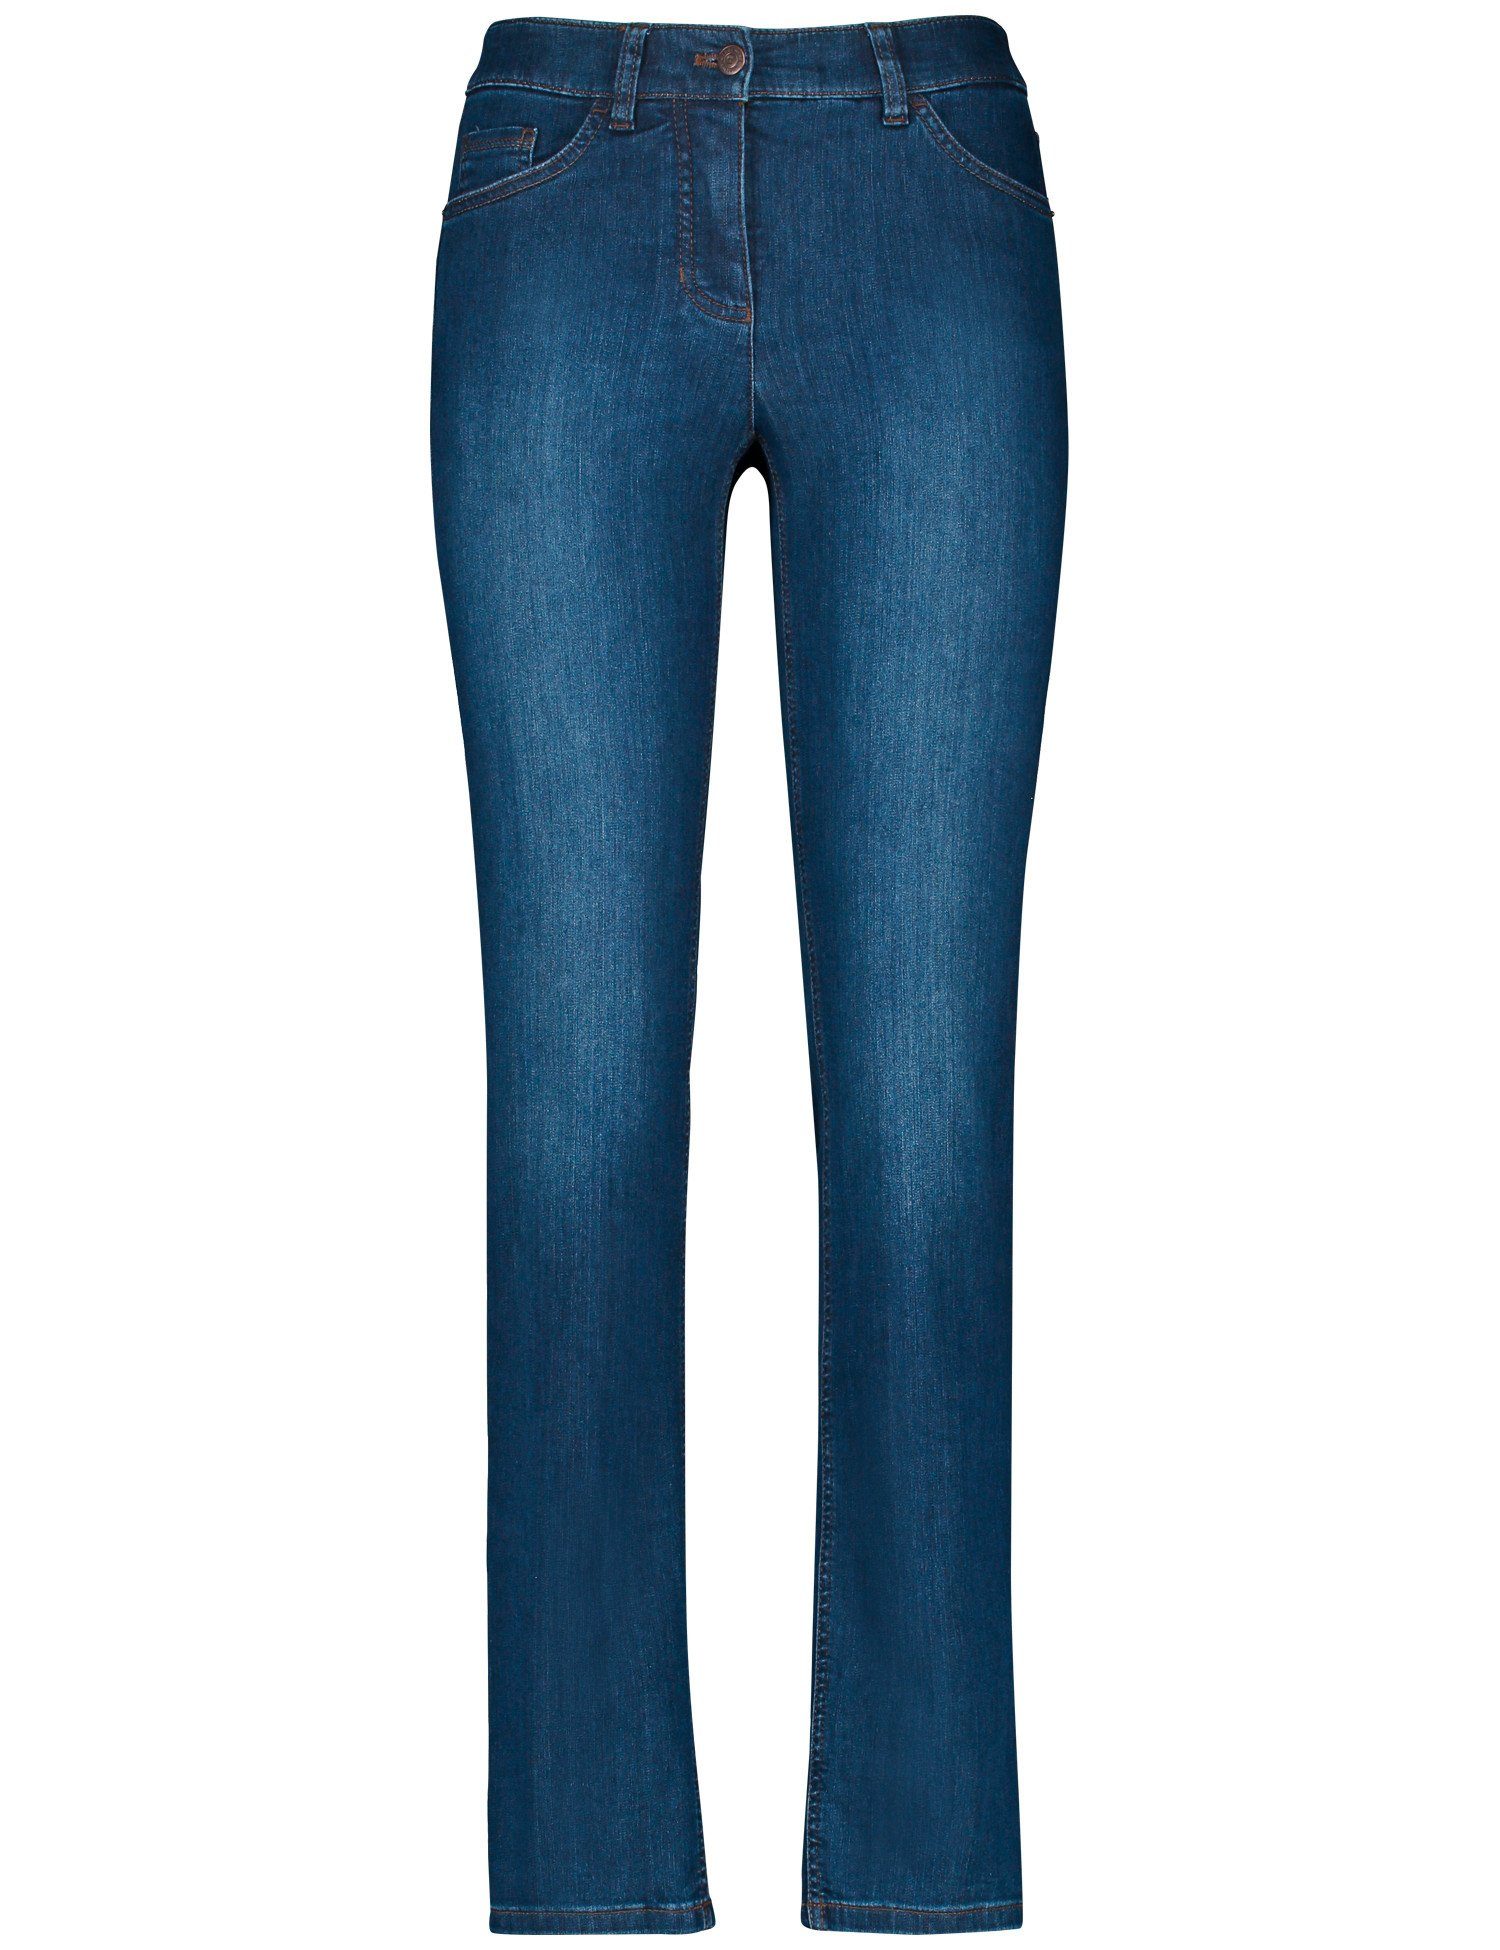 Slimfit WEBER Stretch-Jeans 5-Pocket mit Jeans dark Best4me blue denim GERRY use